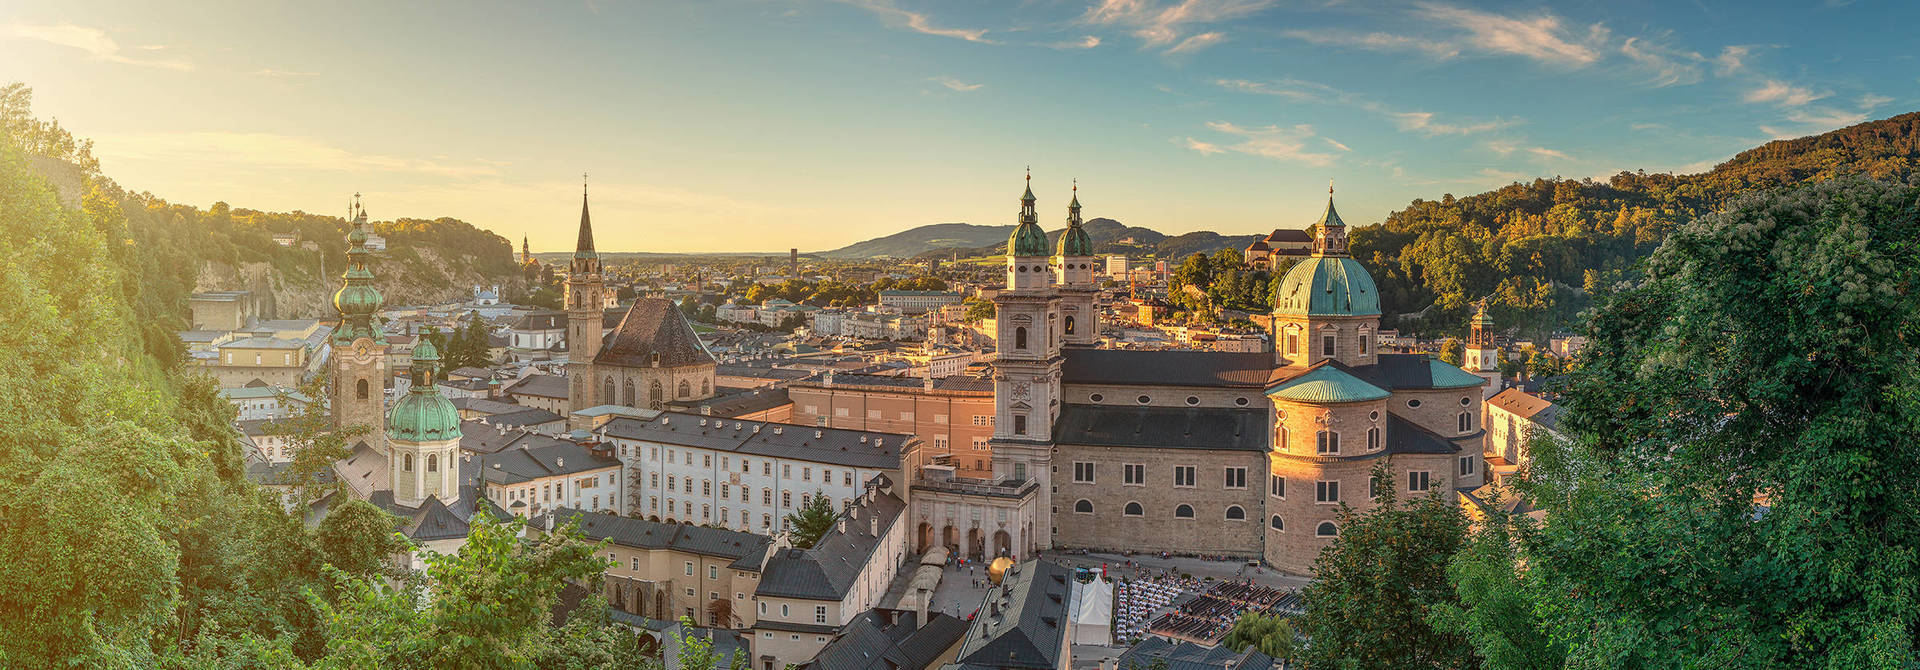 Scoprire la città a piedi - Hyperion Hotel Salzburg